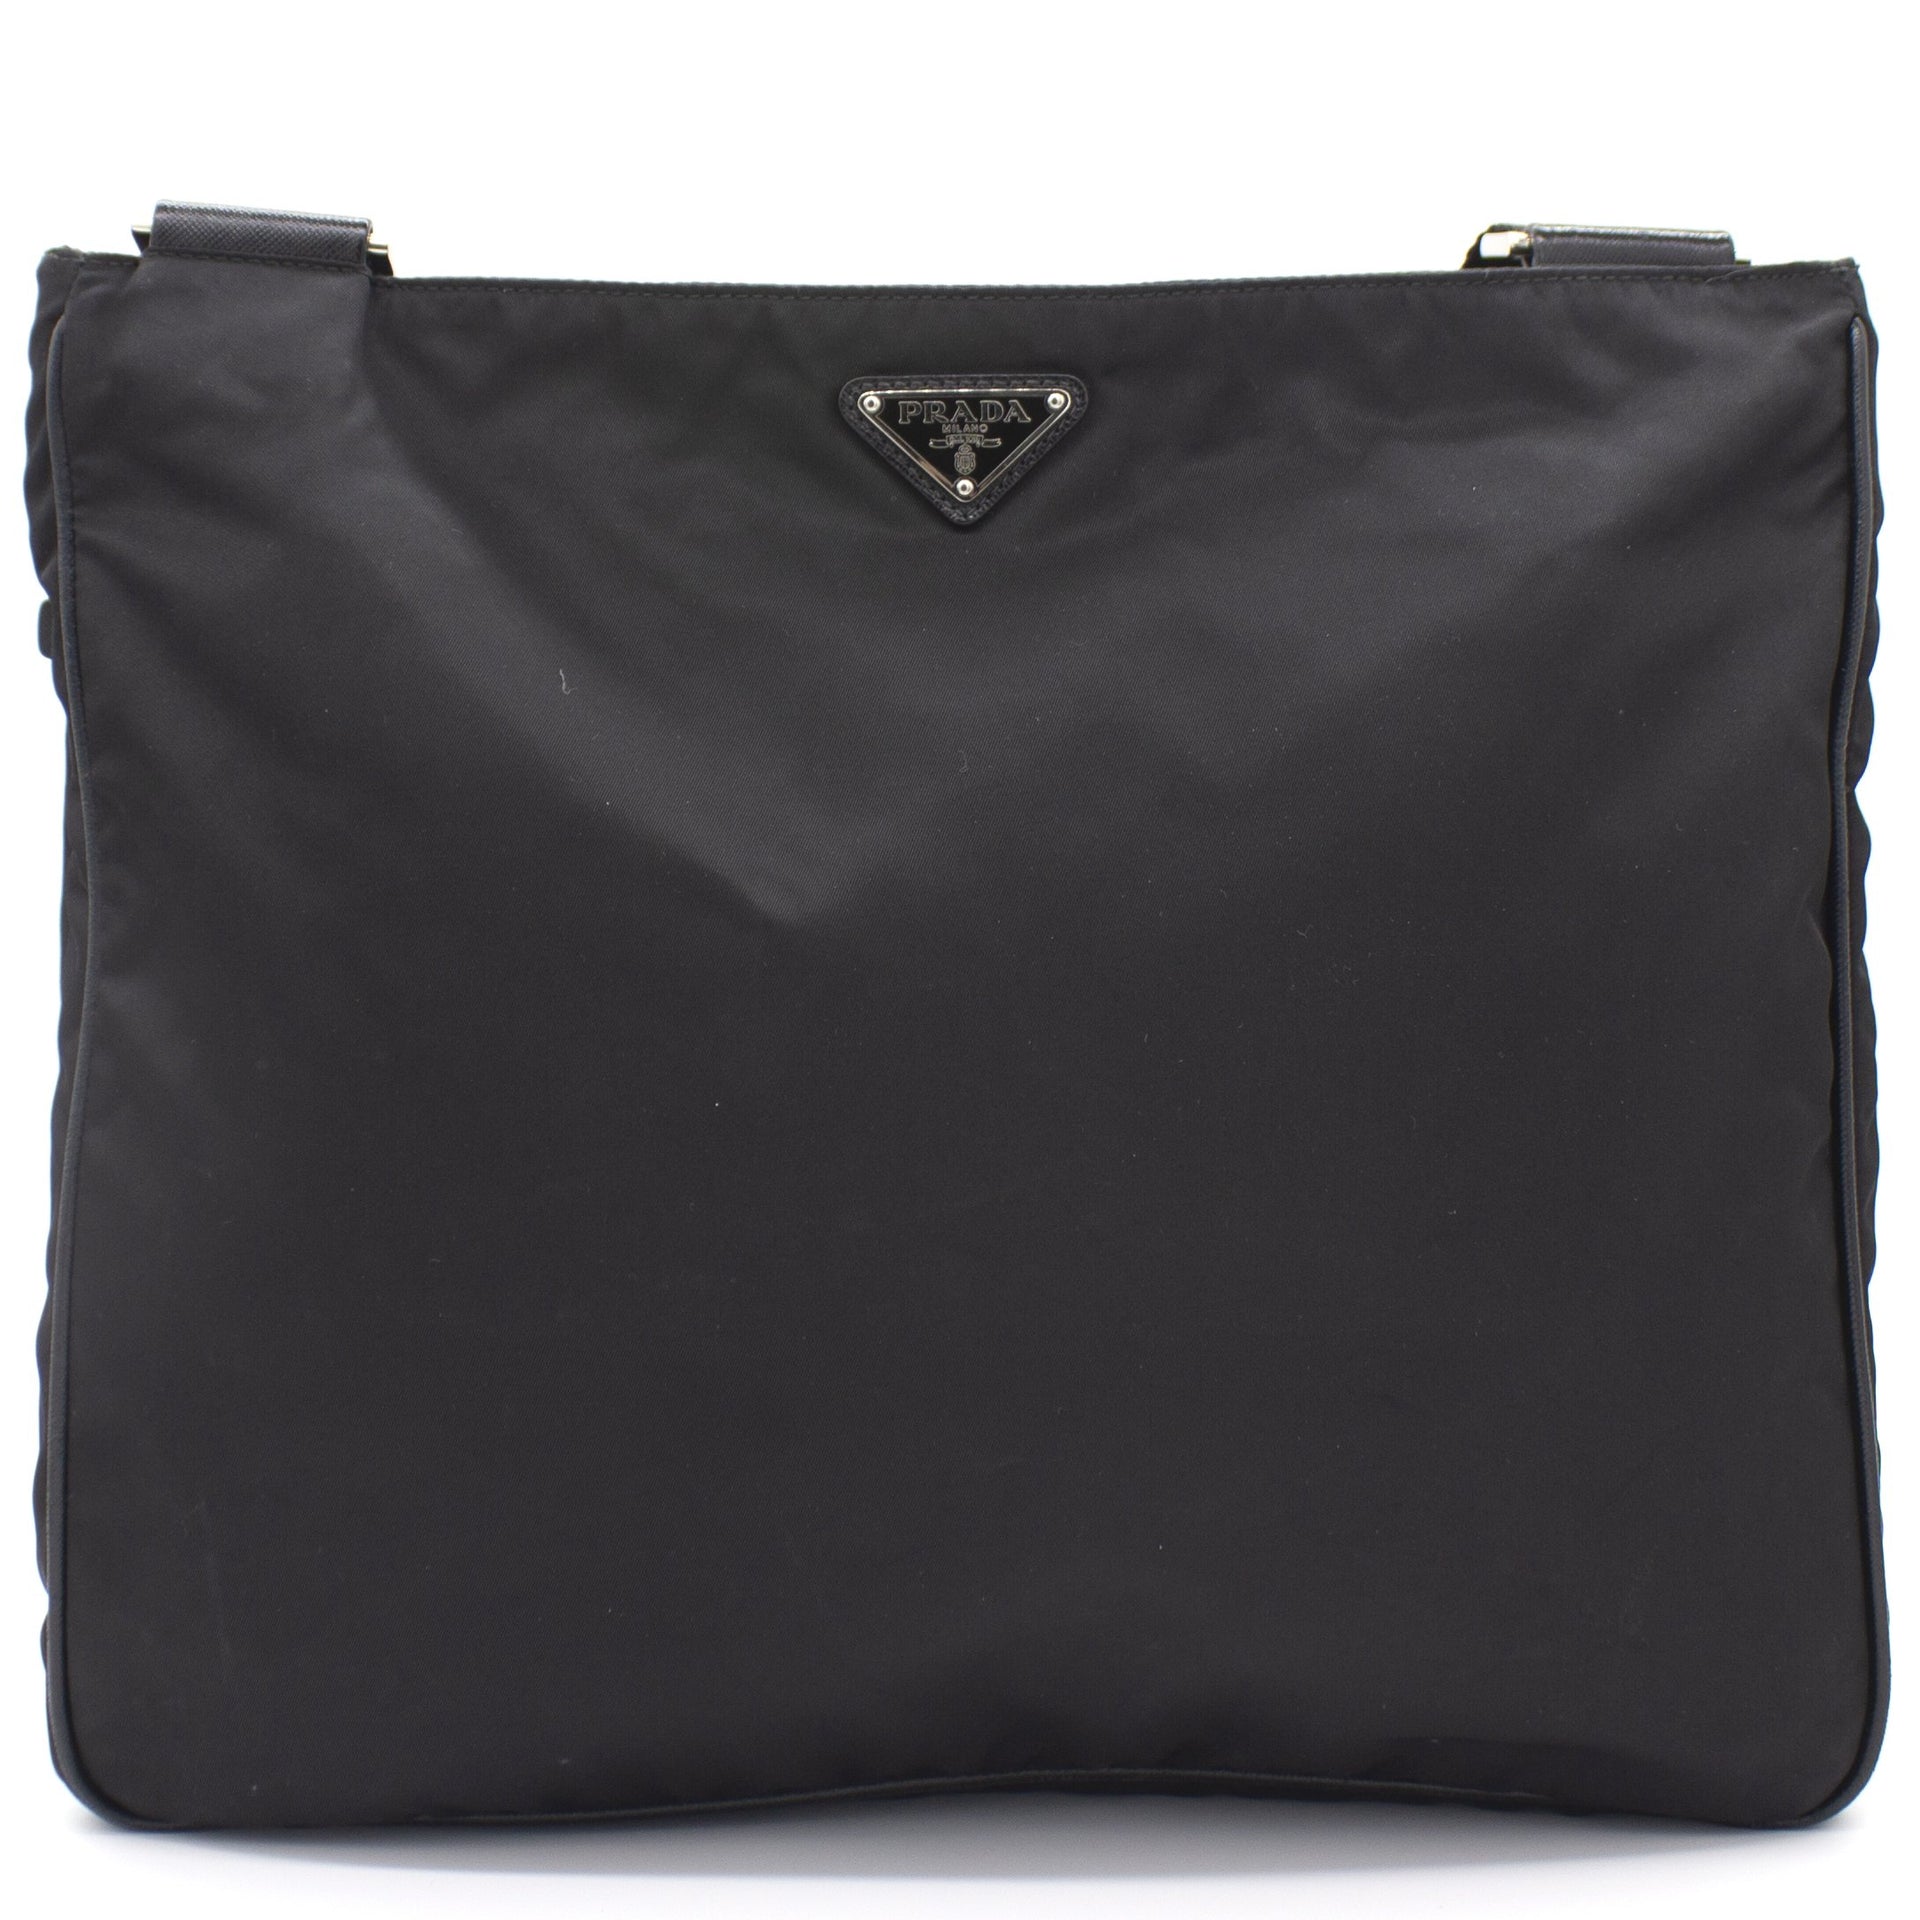 Prada - Men's Triangle Crossbody Bag Messenger - Black - Leather